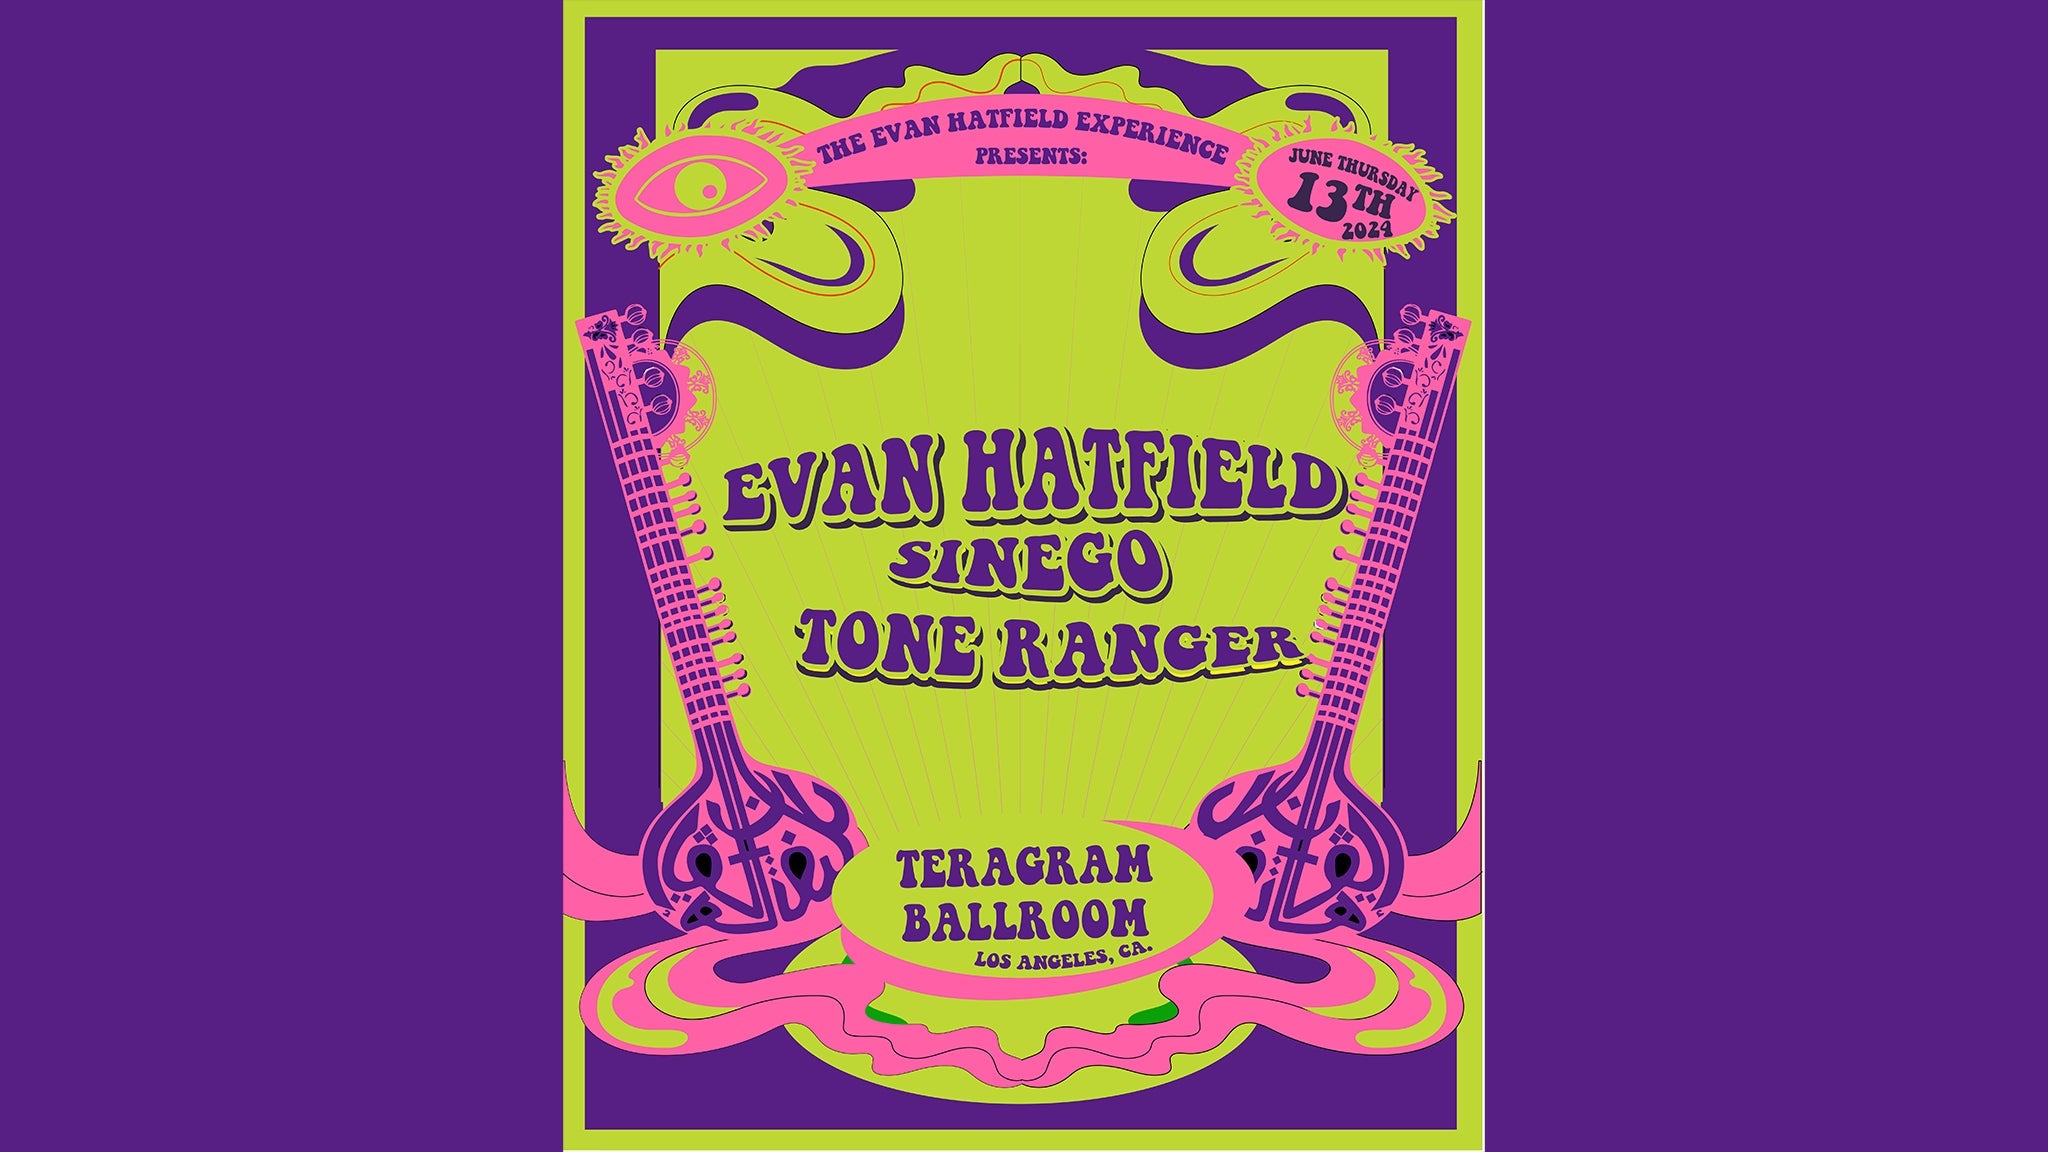 Evan Hatfield + Sinego + Tone Ranger at Teragram Ballroom